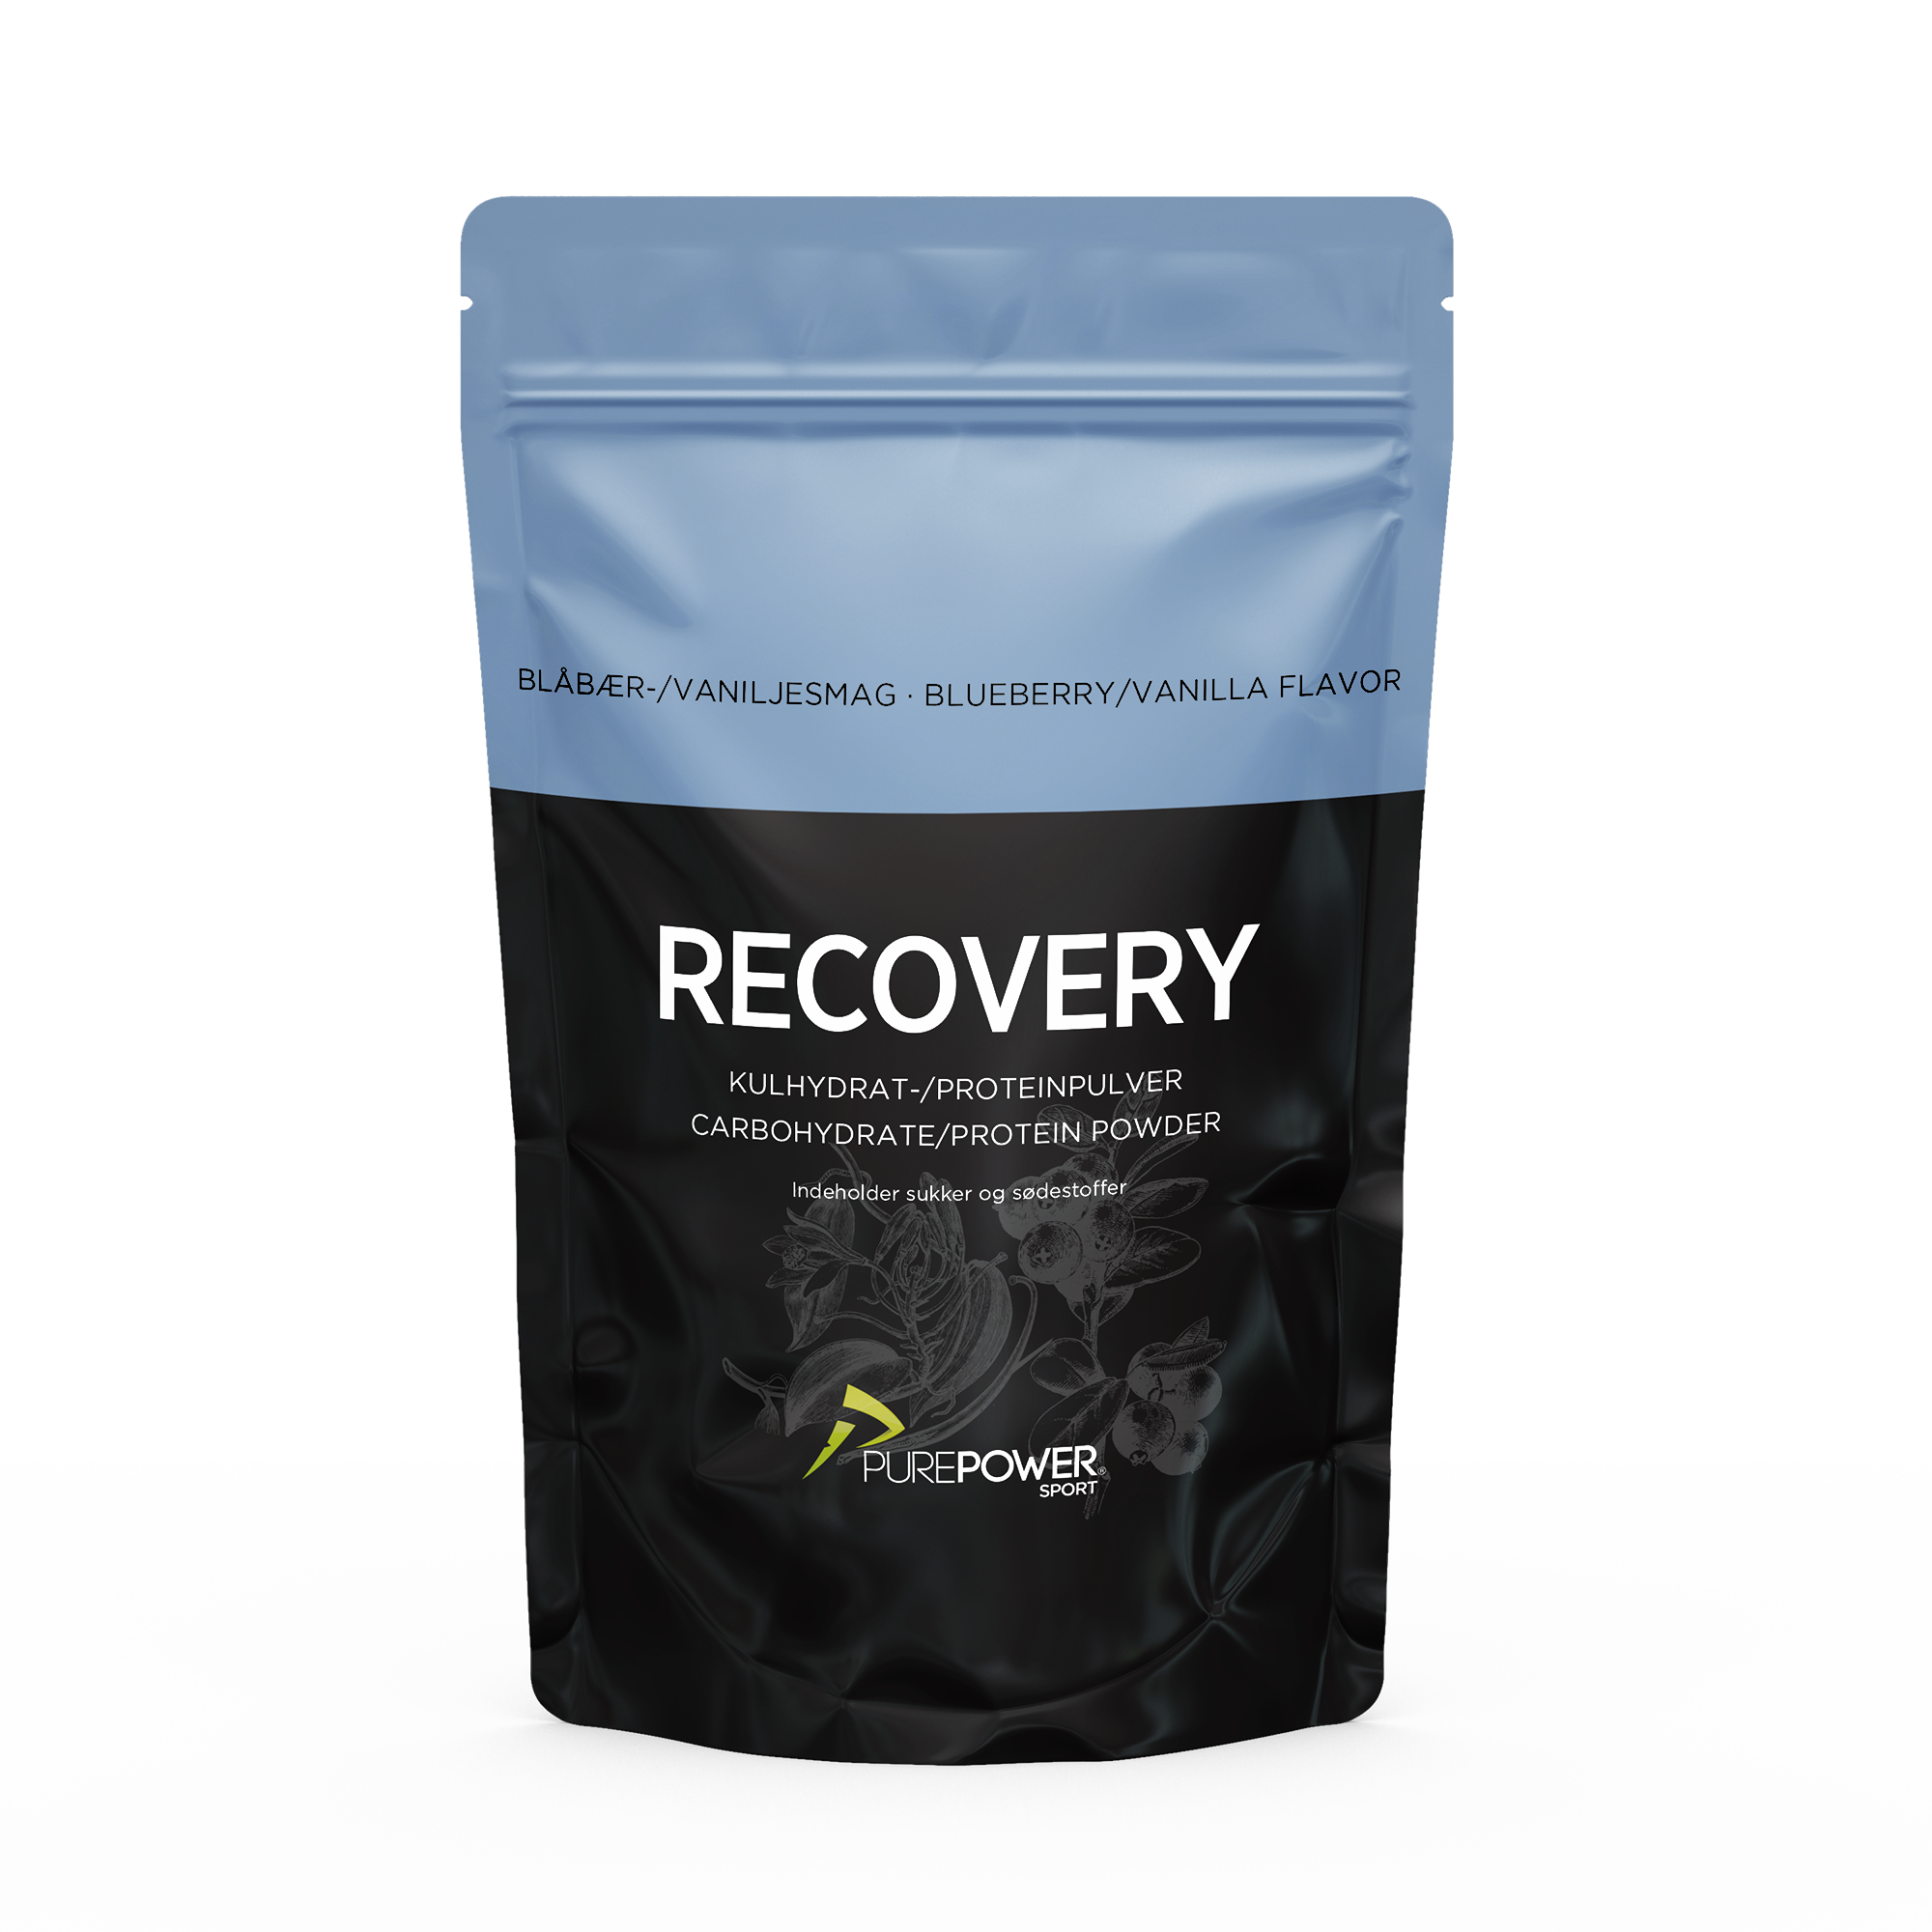 Se PurePower Recovery - Restitutionsdrik - Vanilje / blåbær - 400 g hos PurePower